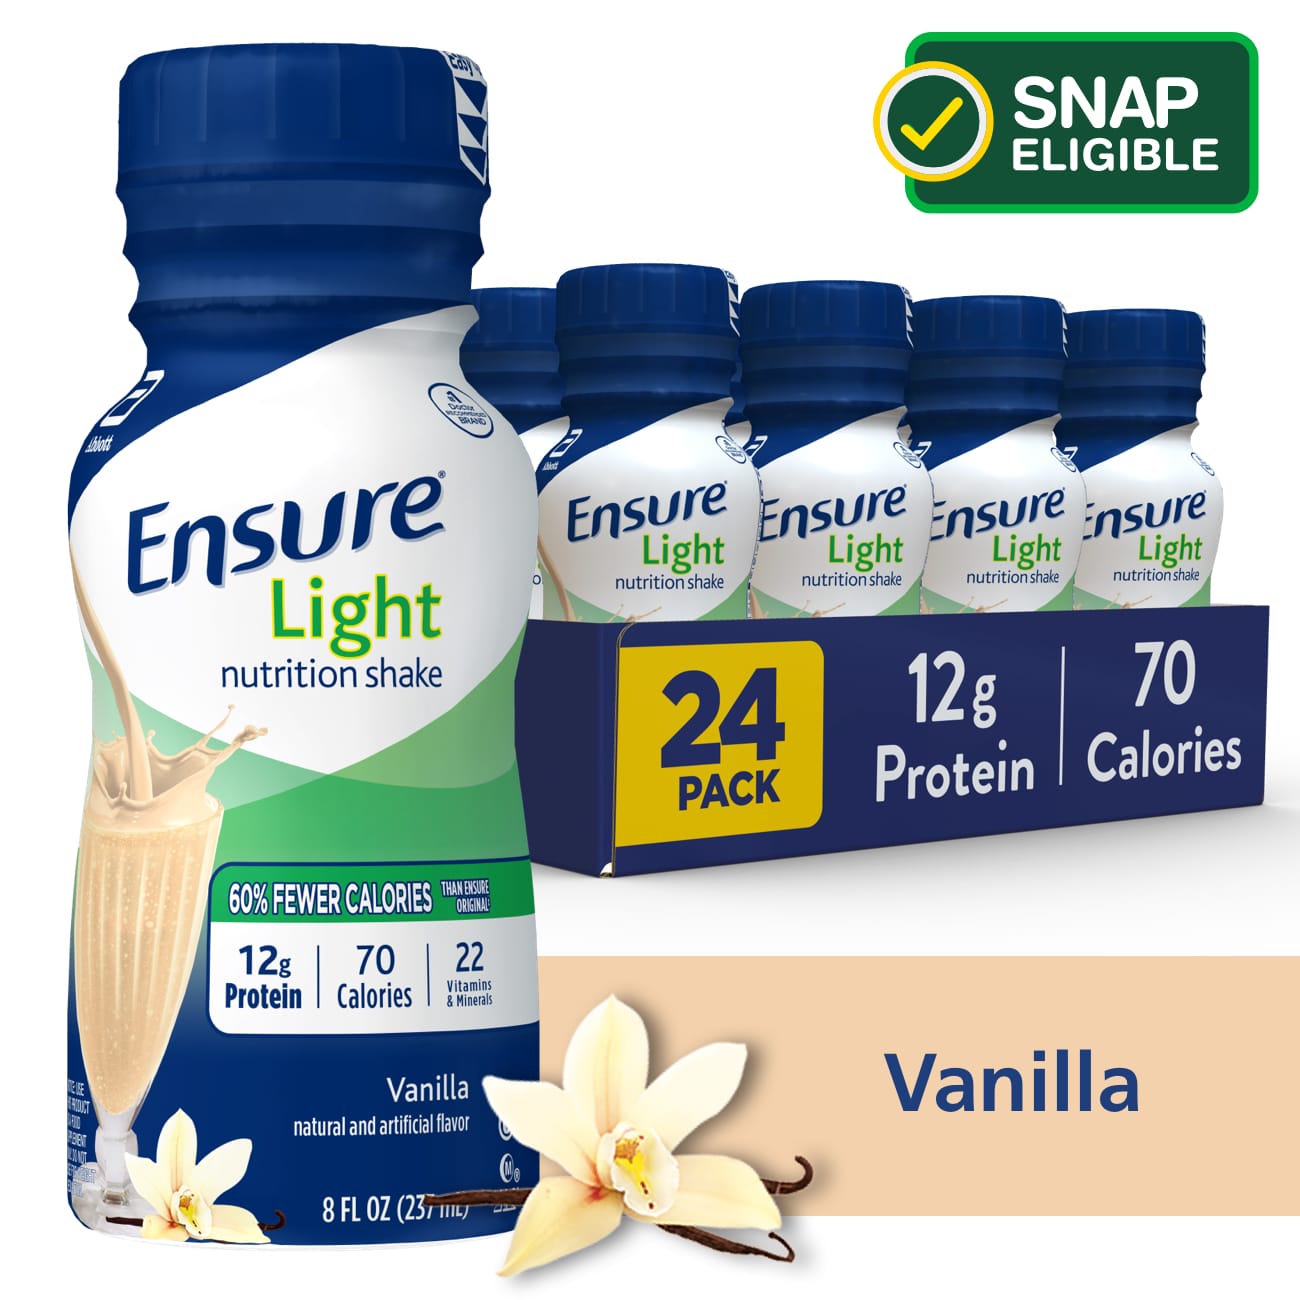 Ensure Light Nutritional Shake, 12g Protein, Vanilla, 8 fl oz, 24 count - image 1 of 12